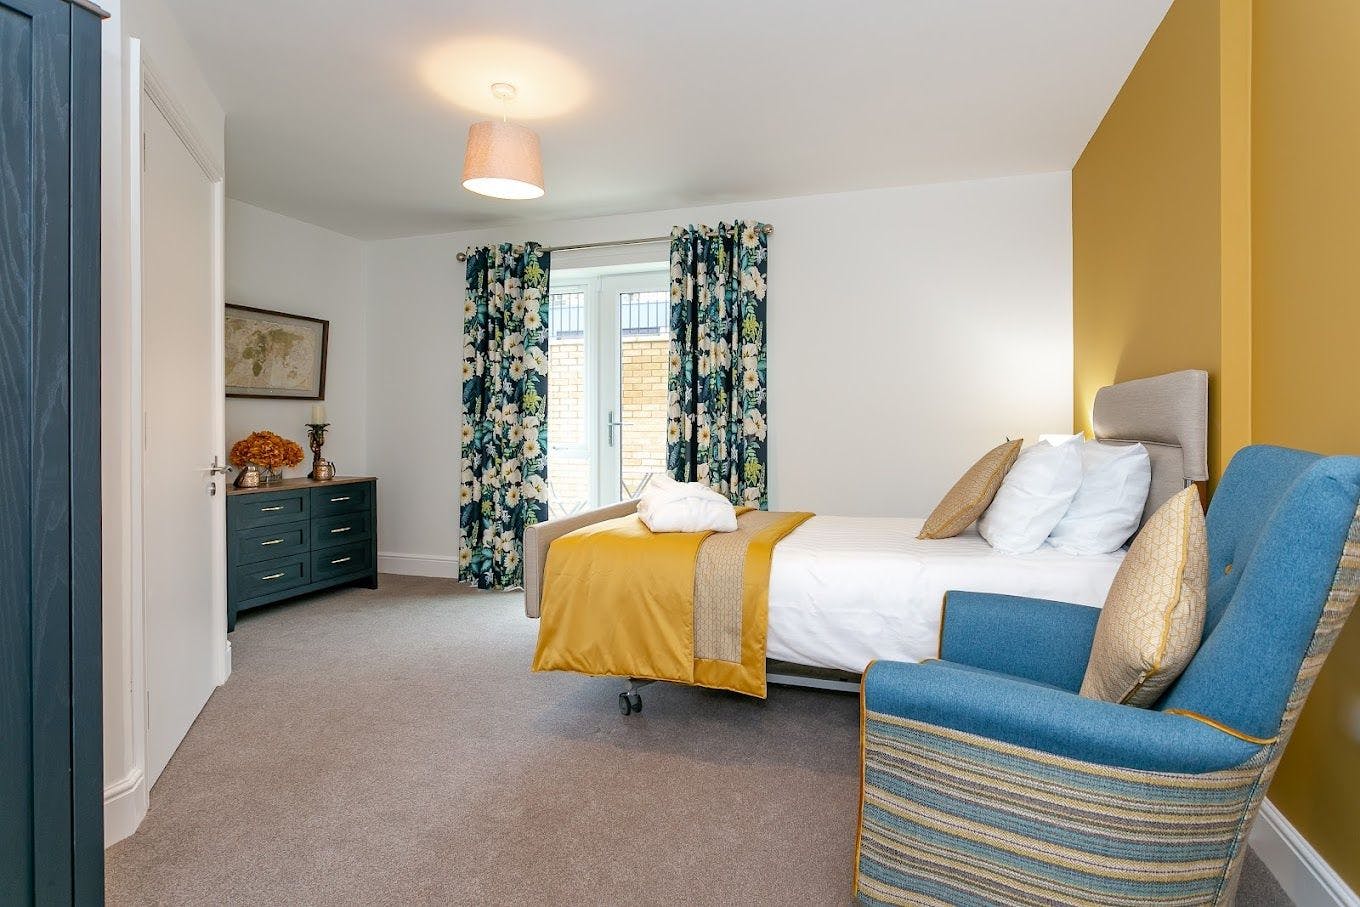 Bedroom of Harcourt Gardens care home in Harrogate, Yorkshire